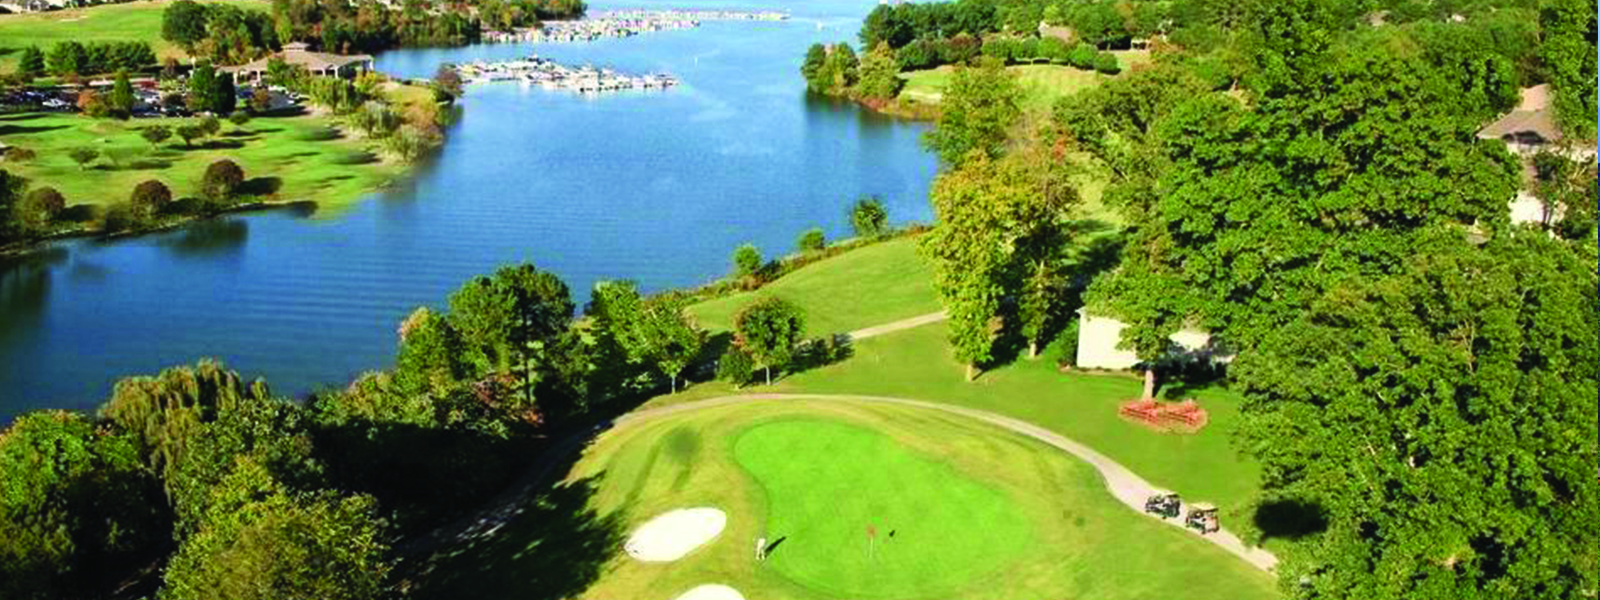 Tellico Village | Tennessee Retirement Community | Premier Golf